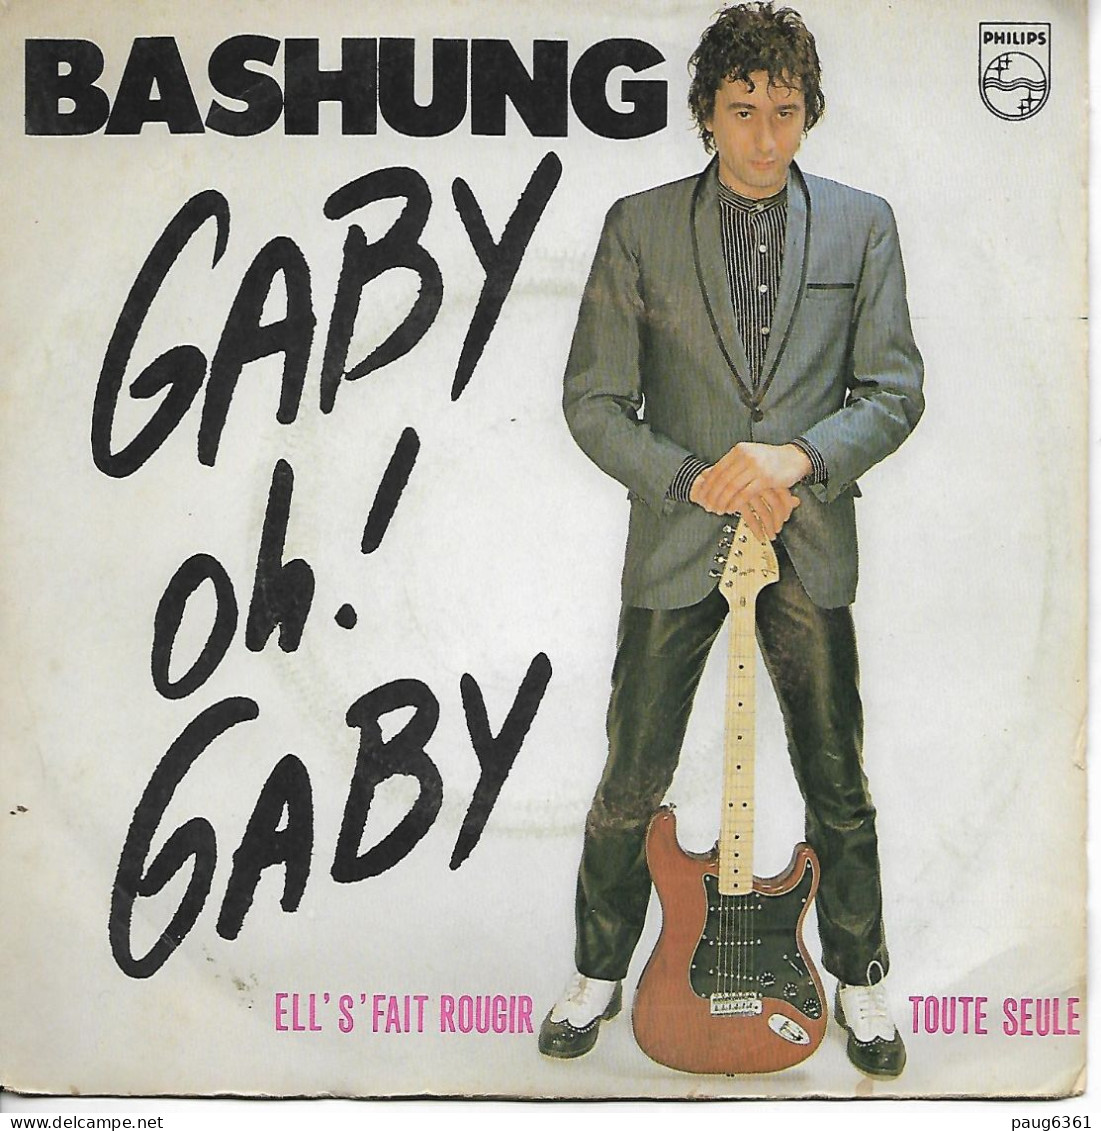 Bashung Gaby Oh! Gaby - Ell's'fait Rougir Toute Seule - Philips - 6172 310 PG 100 - Phonogram  BON ETAT VG - Otros - Canción Francesa